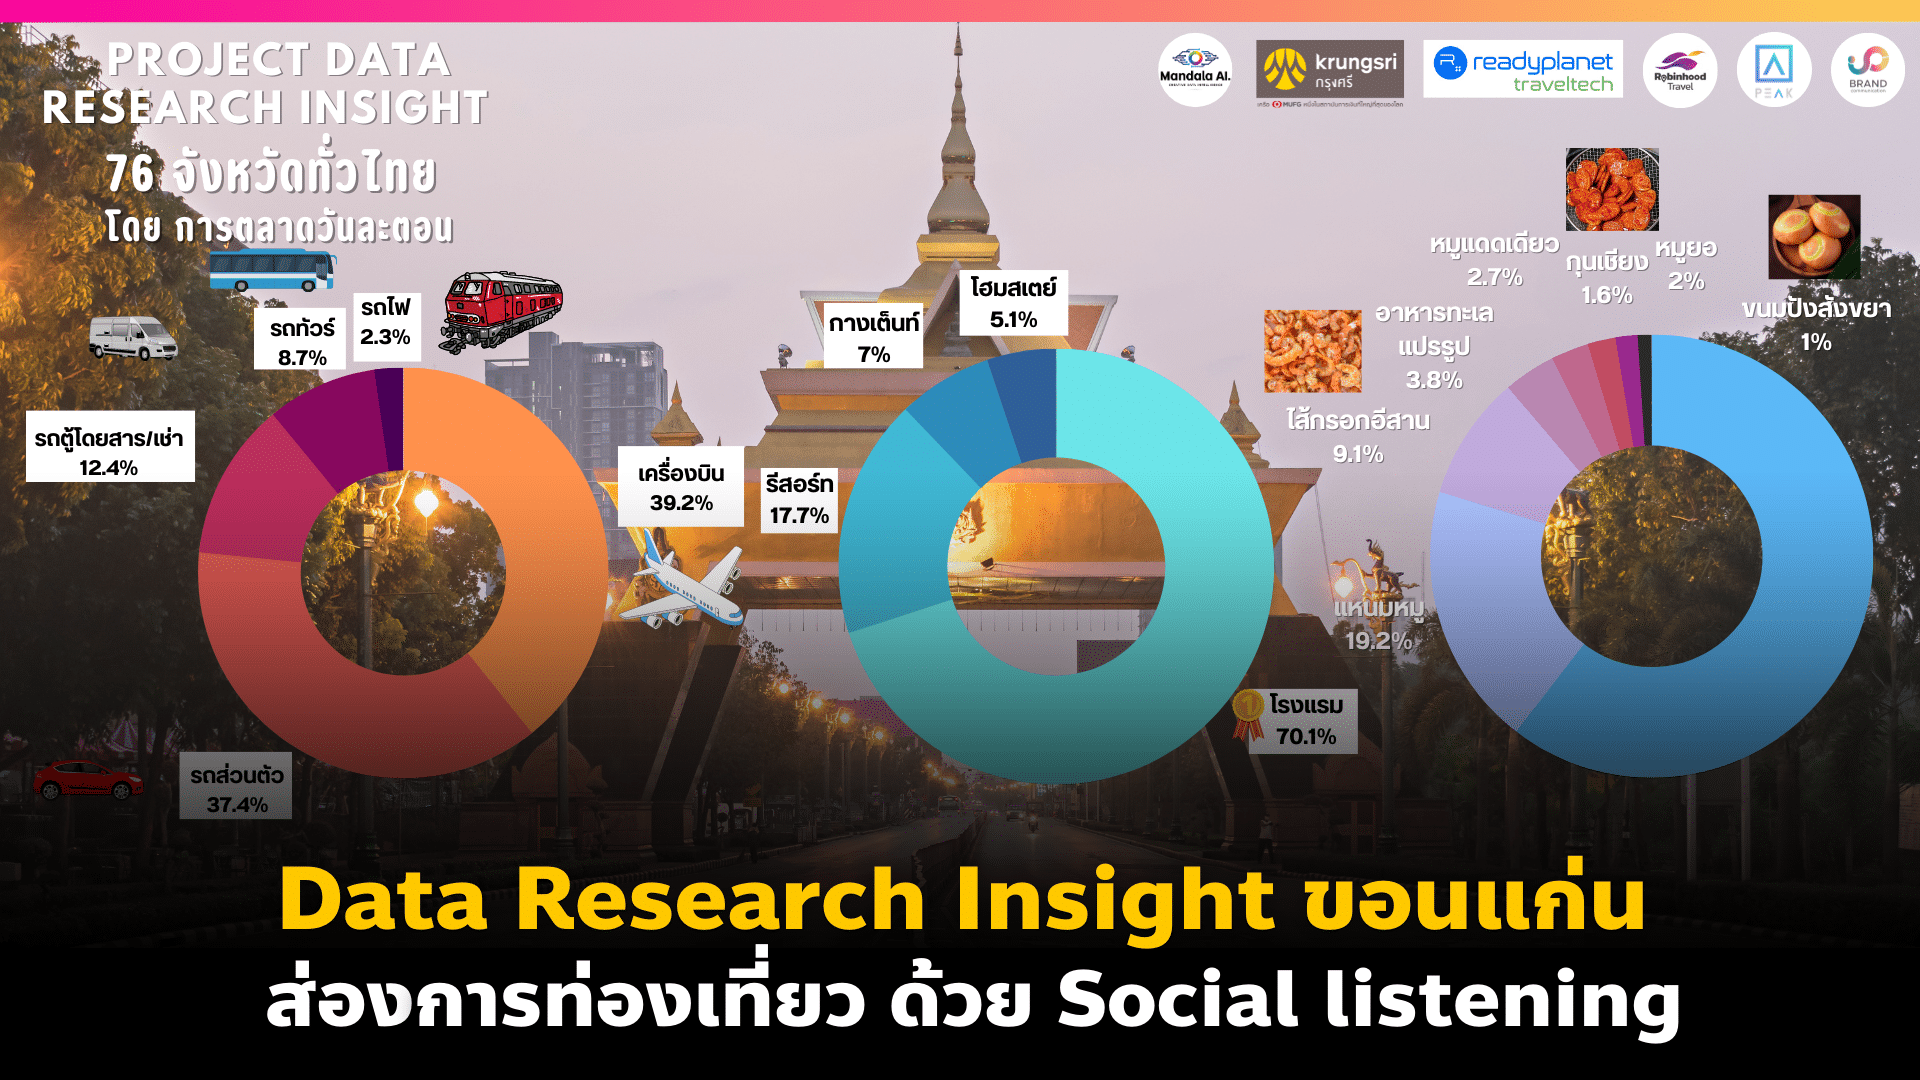 Data Research Insight ขอนแก่น ส่องการท่องเที่ยว By Social Listening